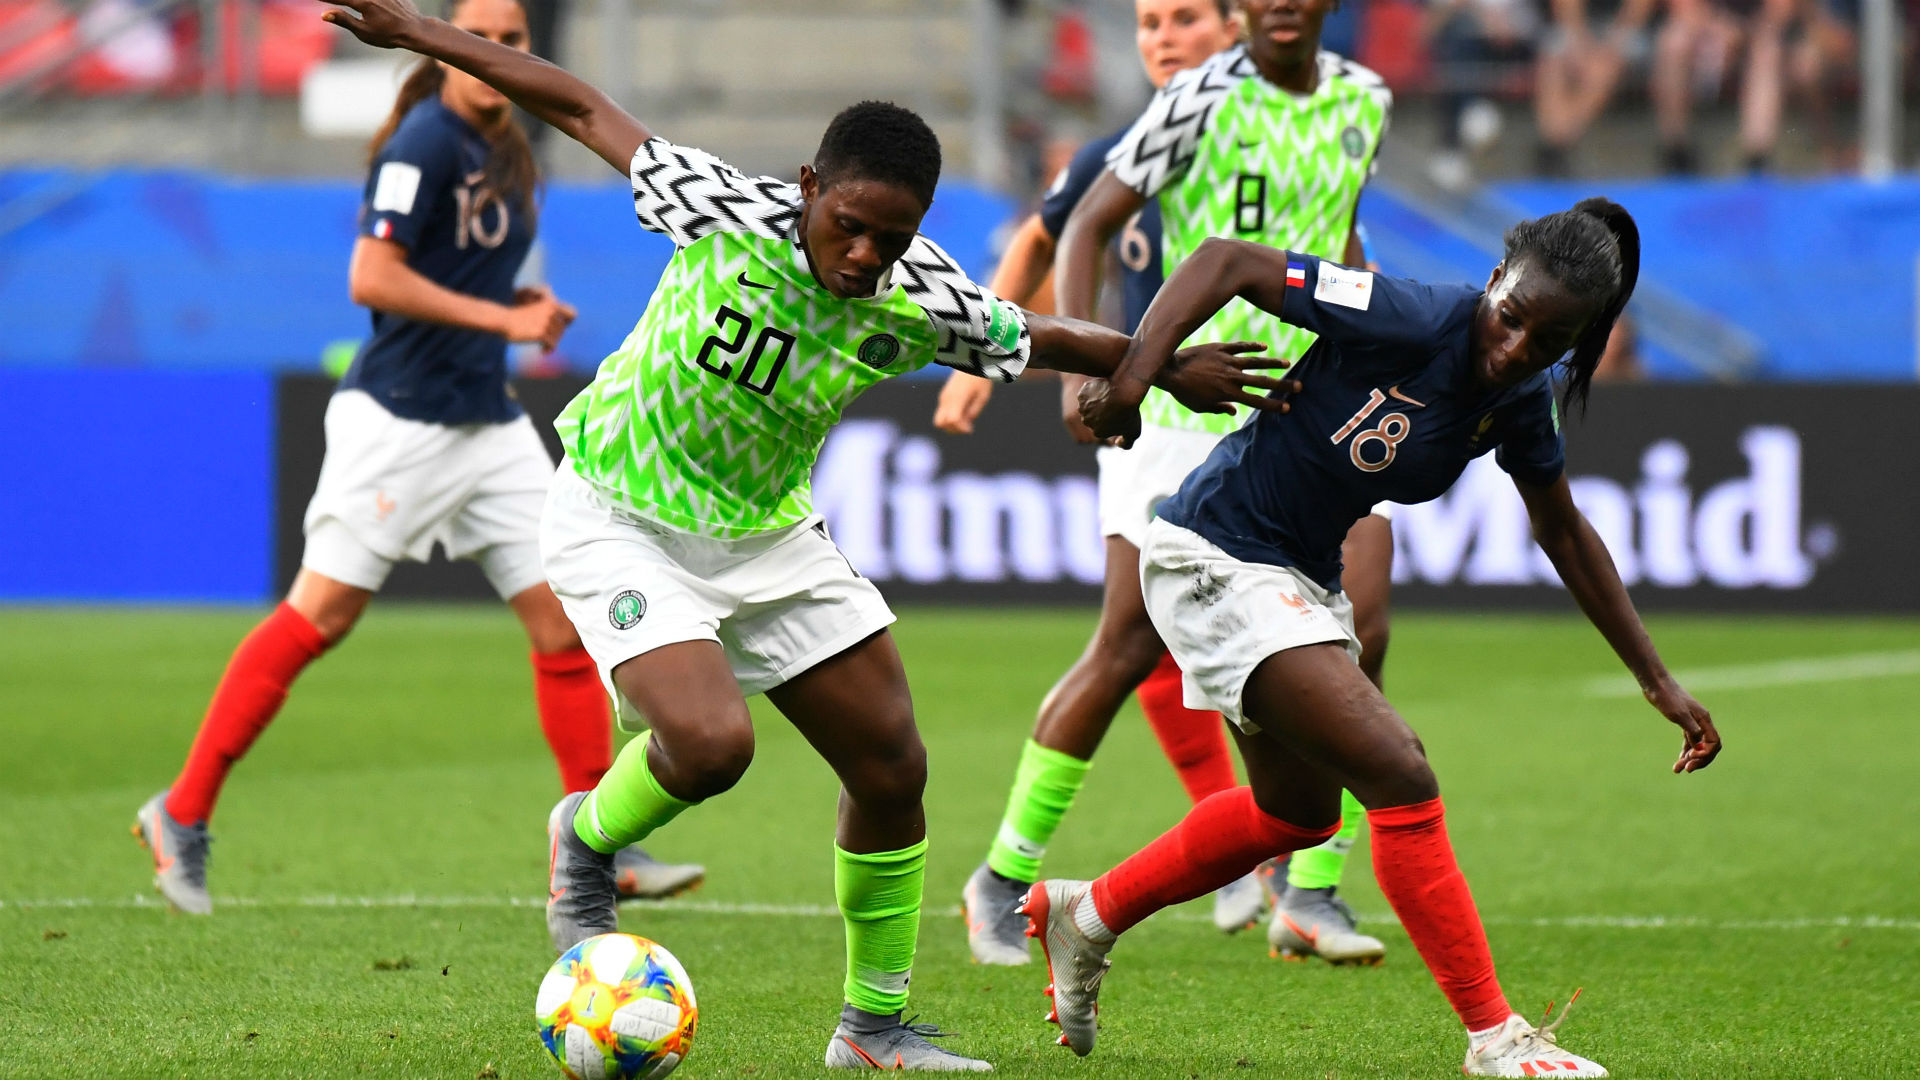 Soi-keo-nigeria-vs-ghana-0h-ngay-30-3-2022-1